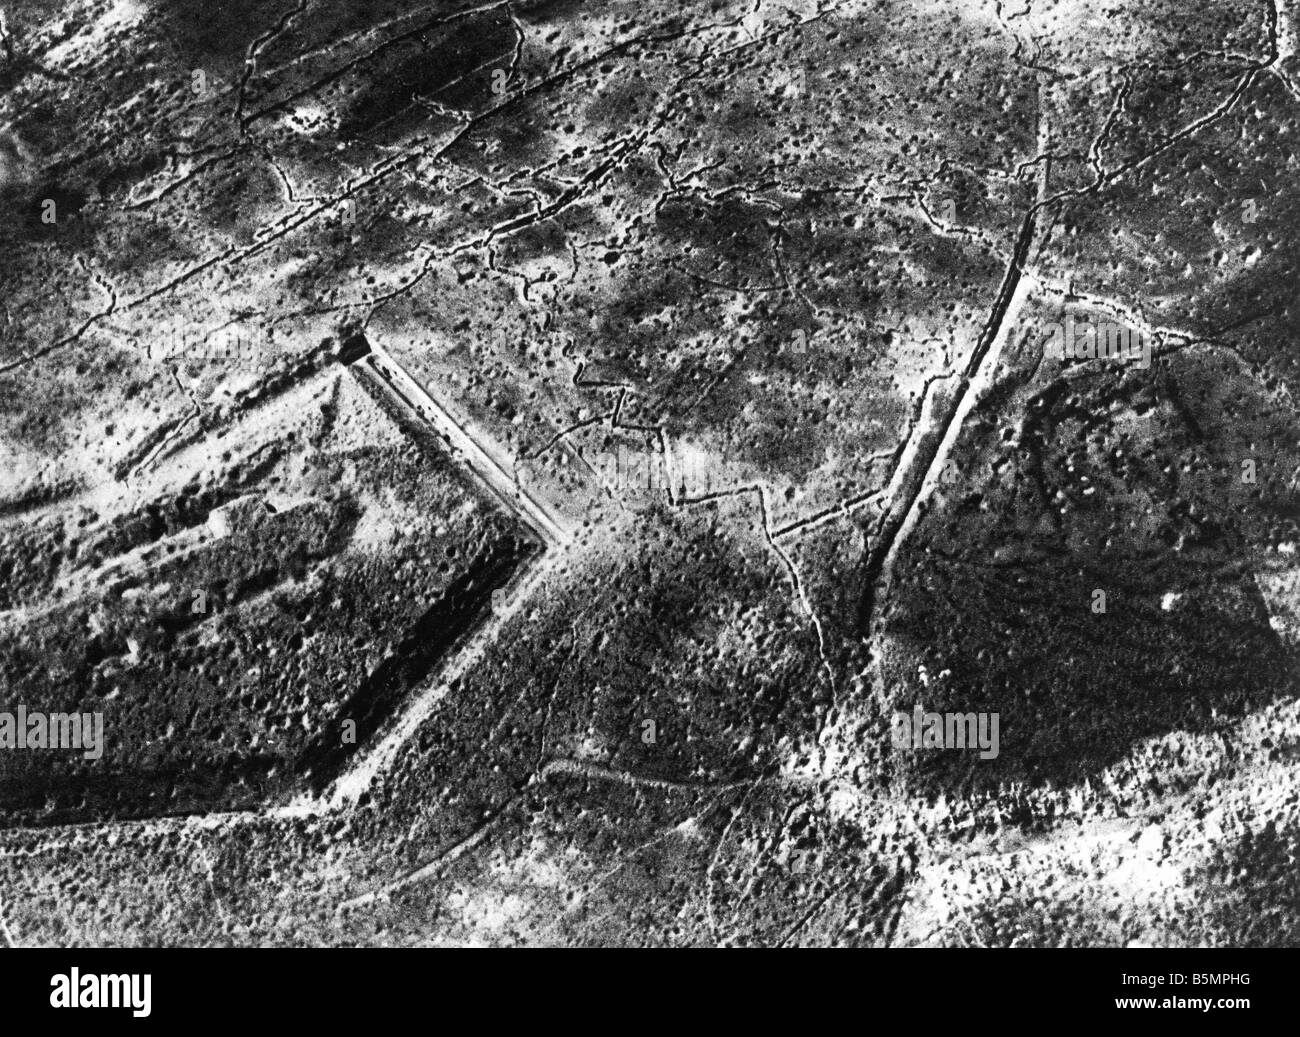 9 1916 10 24 A1 2 E Douaumont tras la reconquista 1916 Guerra Mundial 1 1914 18 frente occidental batalla de Verdun 1916 foto aérea de destr Foto de stock